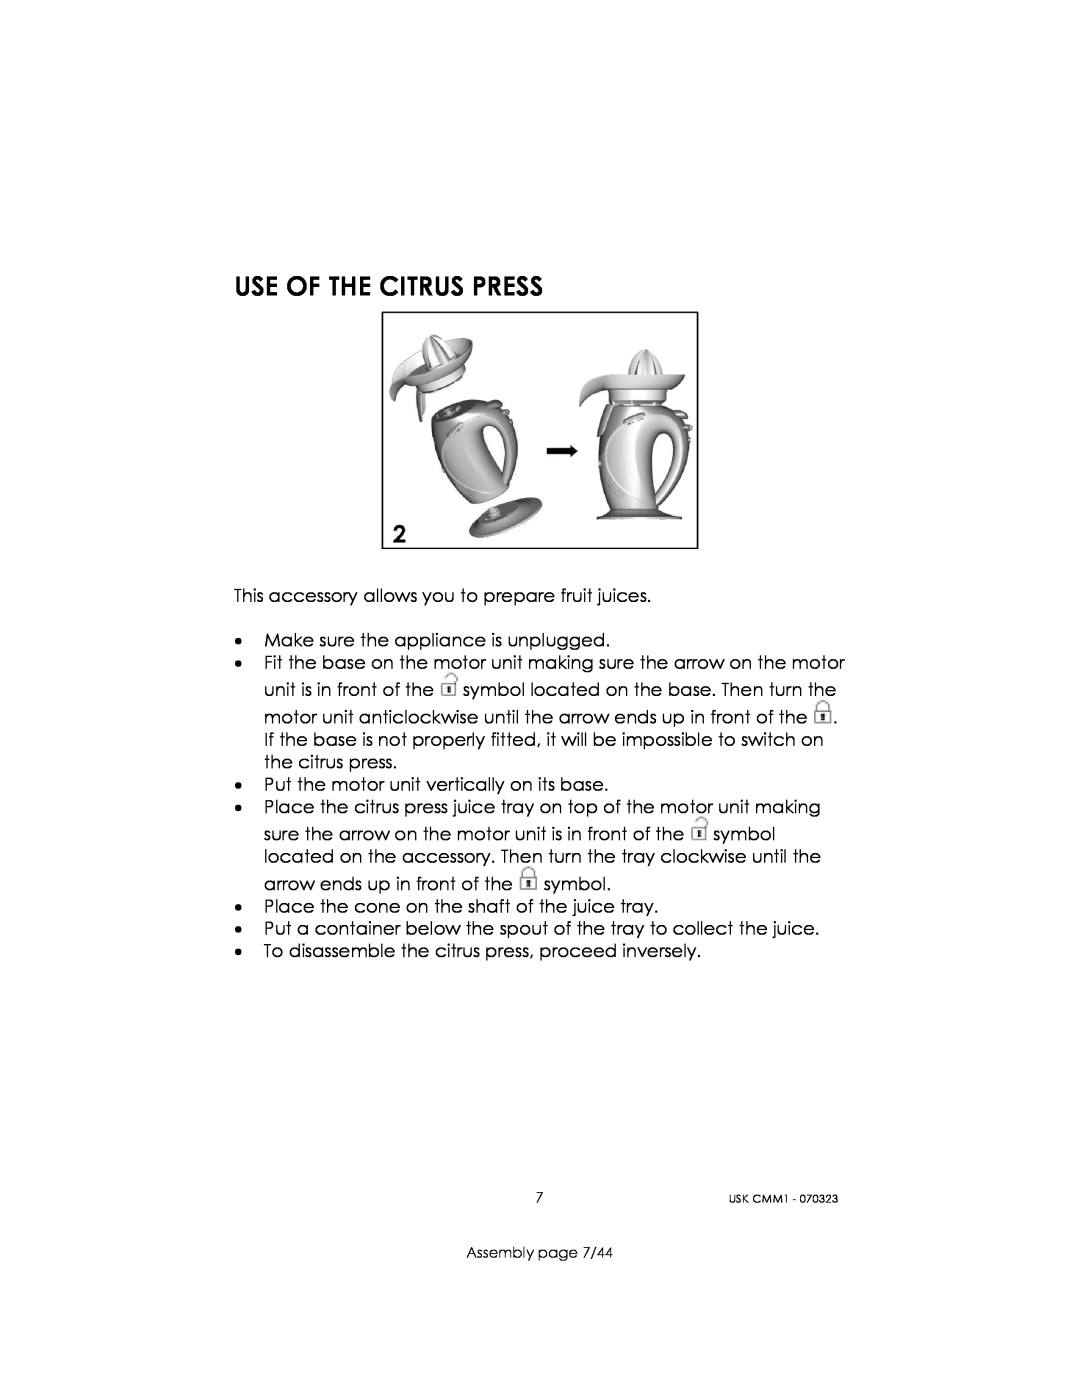 Kalorik USK CMM 1 manual Use Of The Citrus Press, Assembly page 7/44 